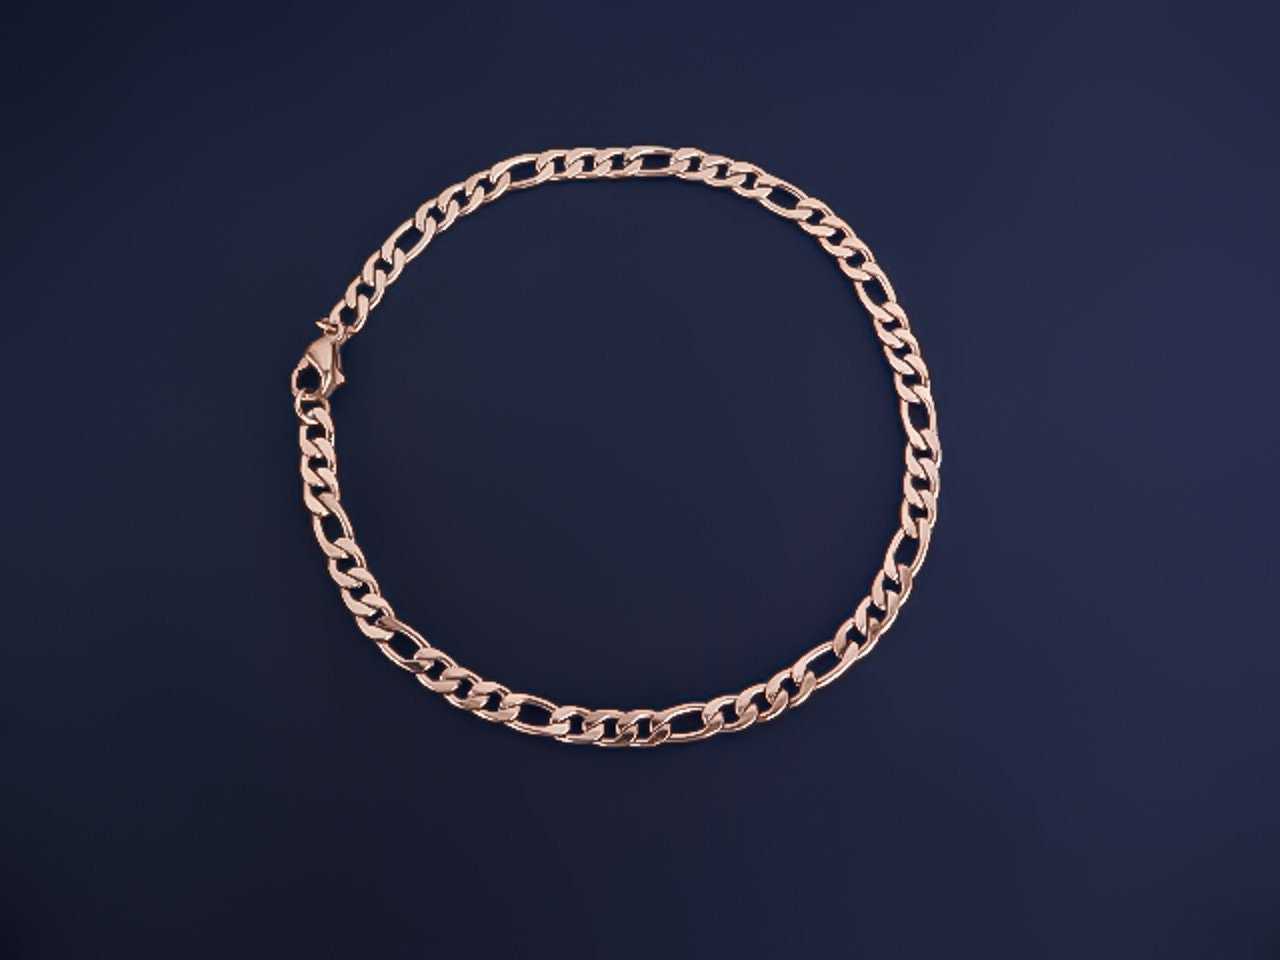 BRACELET with 5mm Figaro Link Chain in Gold - Clasic Bracelet Stylish Gold Bracelets - Bracelets for Women - Chain Bracelet for Men